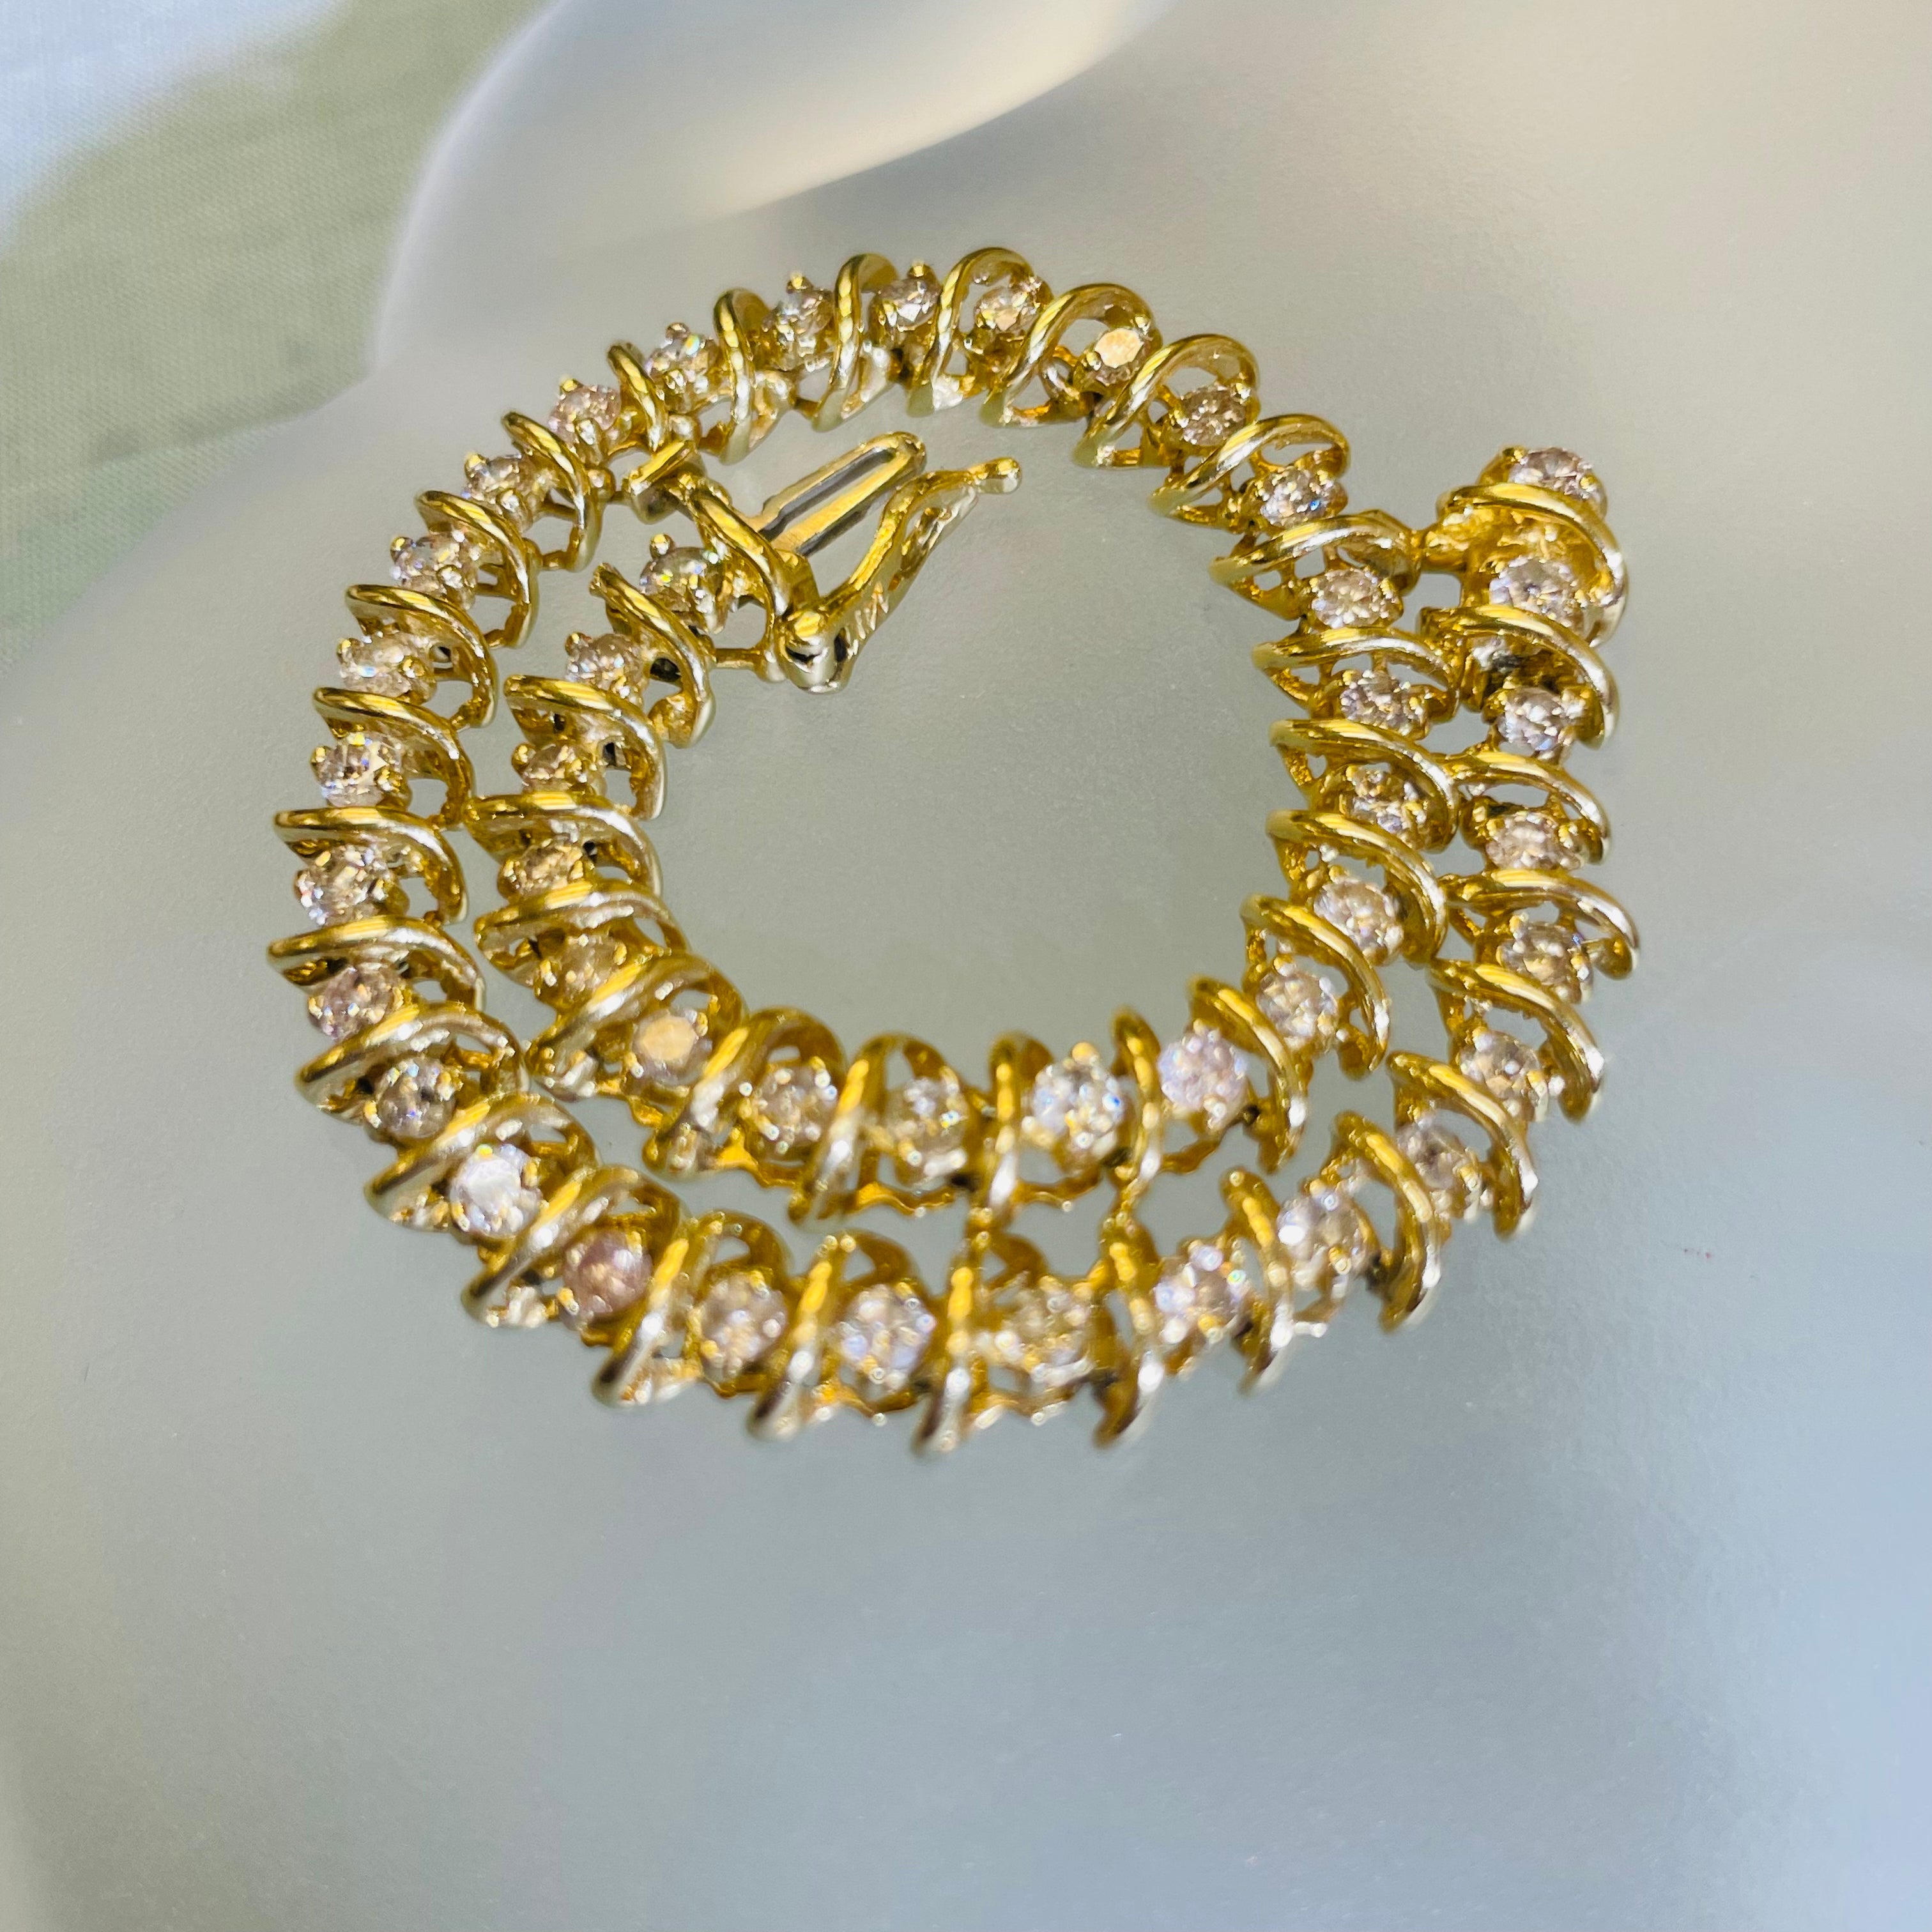 14K Yellow Gold 2.6CT Diamond S Link Tennis Bracelet 7.5"